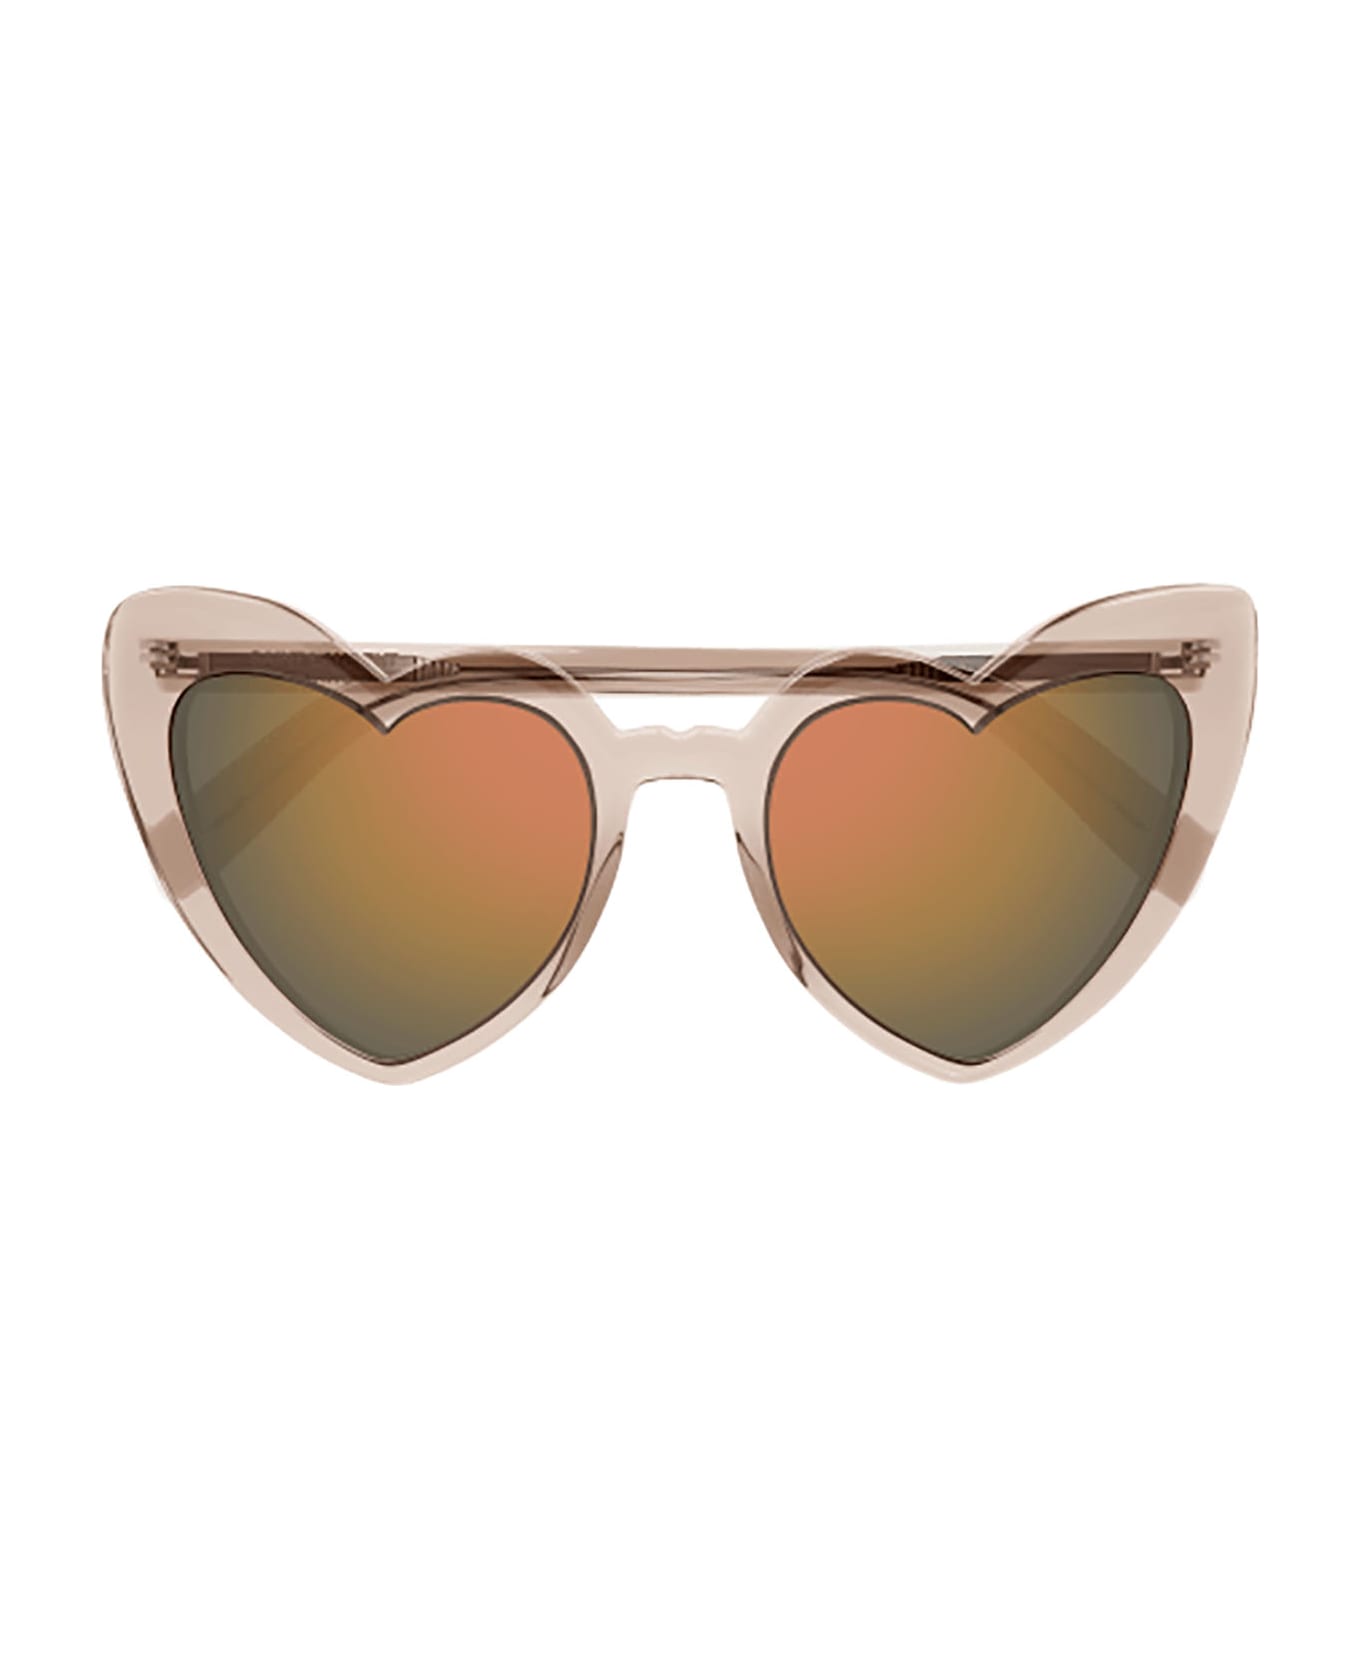 Saint Laurent Eyewear Sl 181 Loulou Sunglasses - 027 nude nude copper サングラス